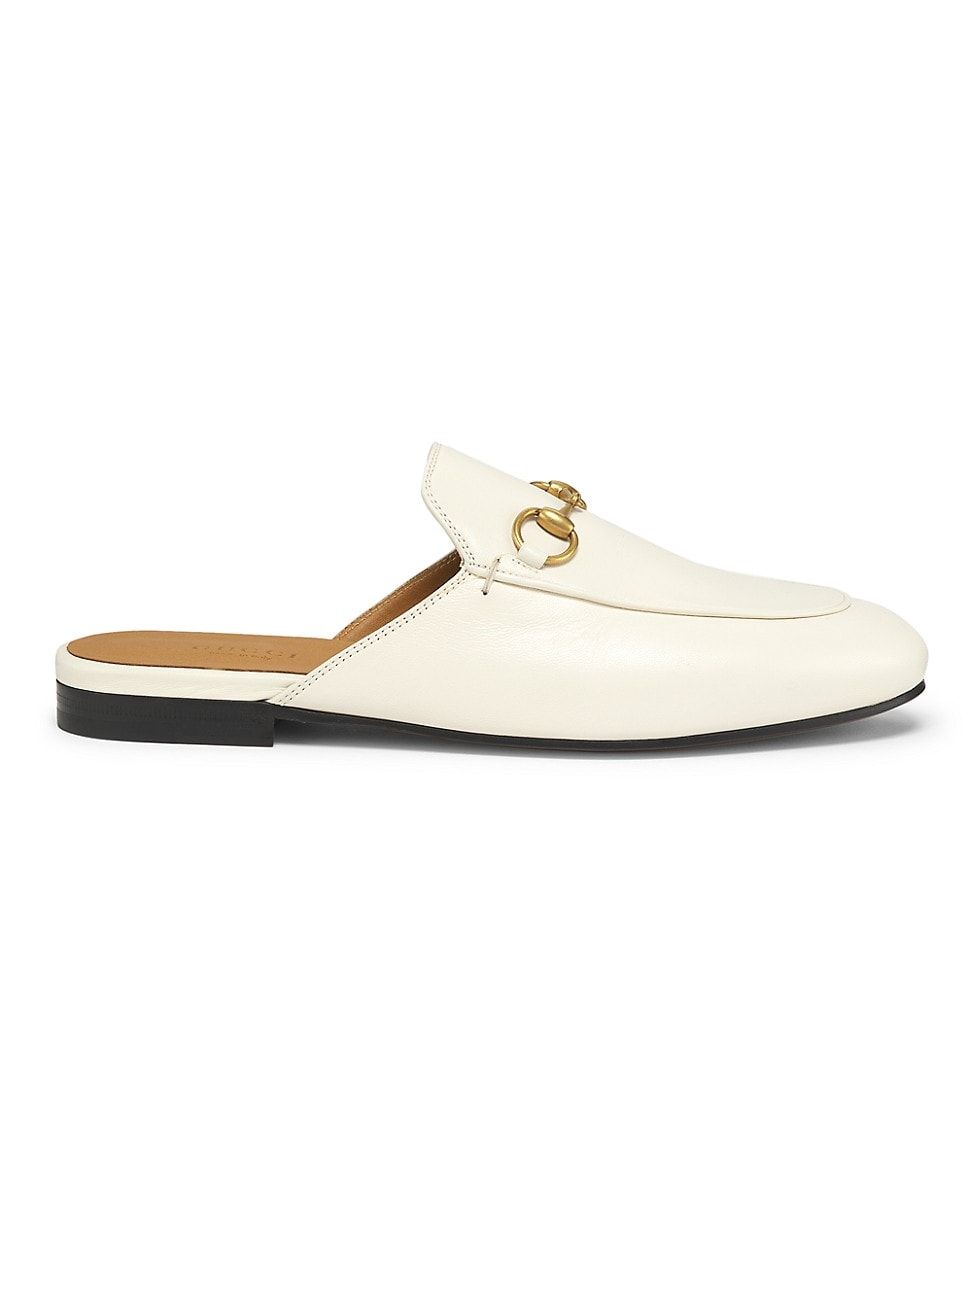 Women's Princetown Leather Slipper - White - Size 11.5 - White - Size 11.5 | Saks Fifth Avenue